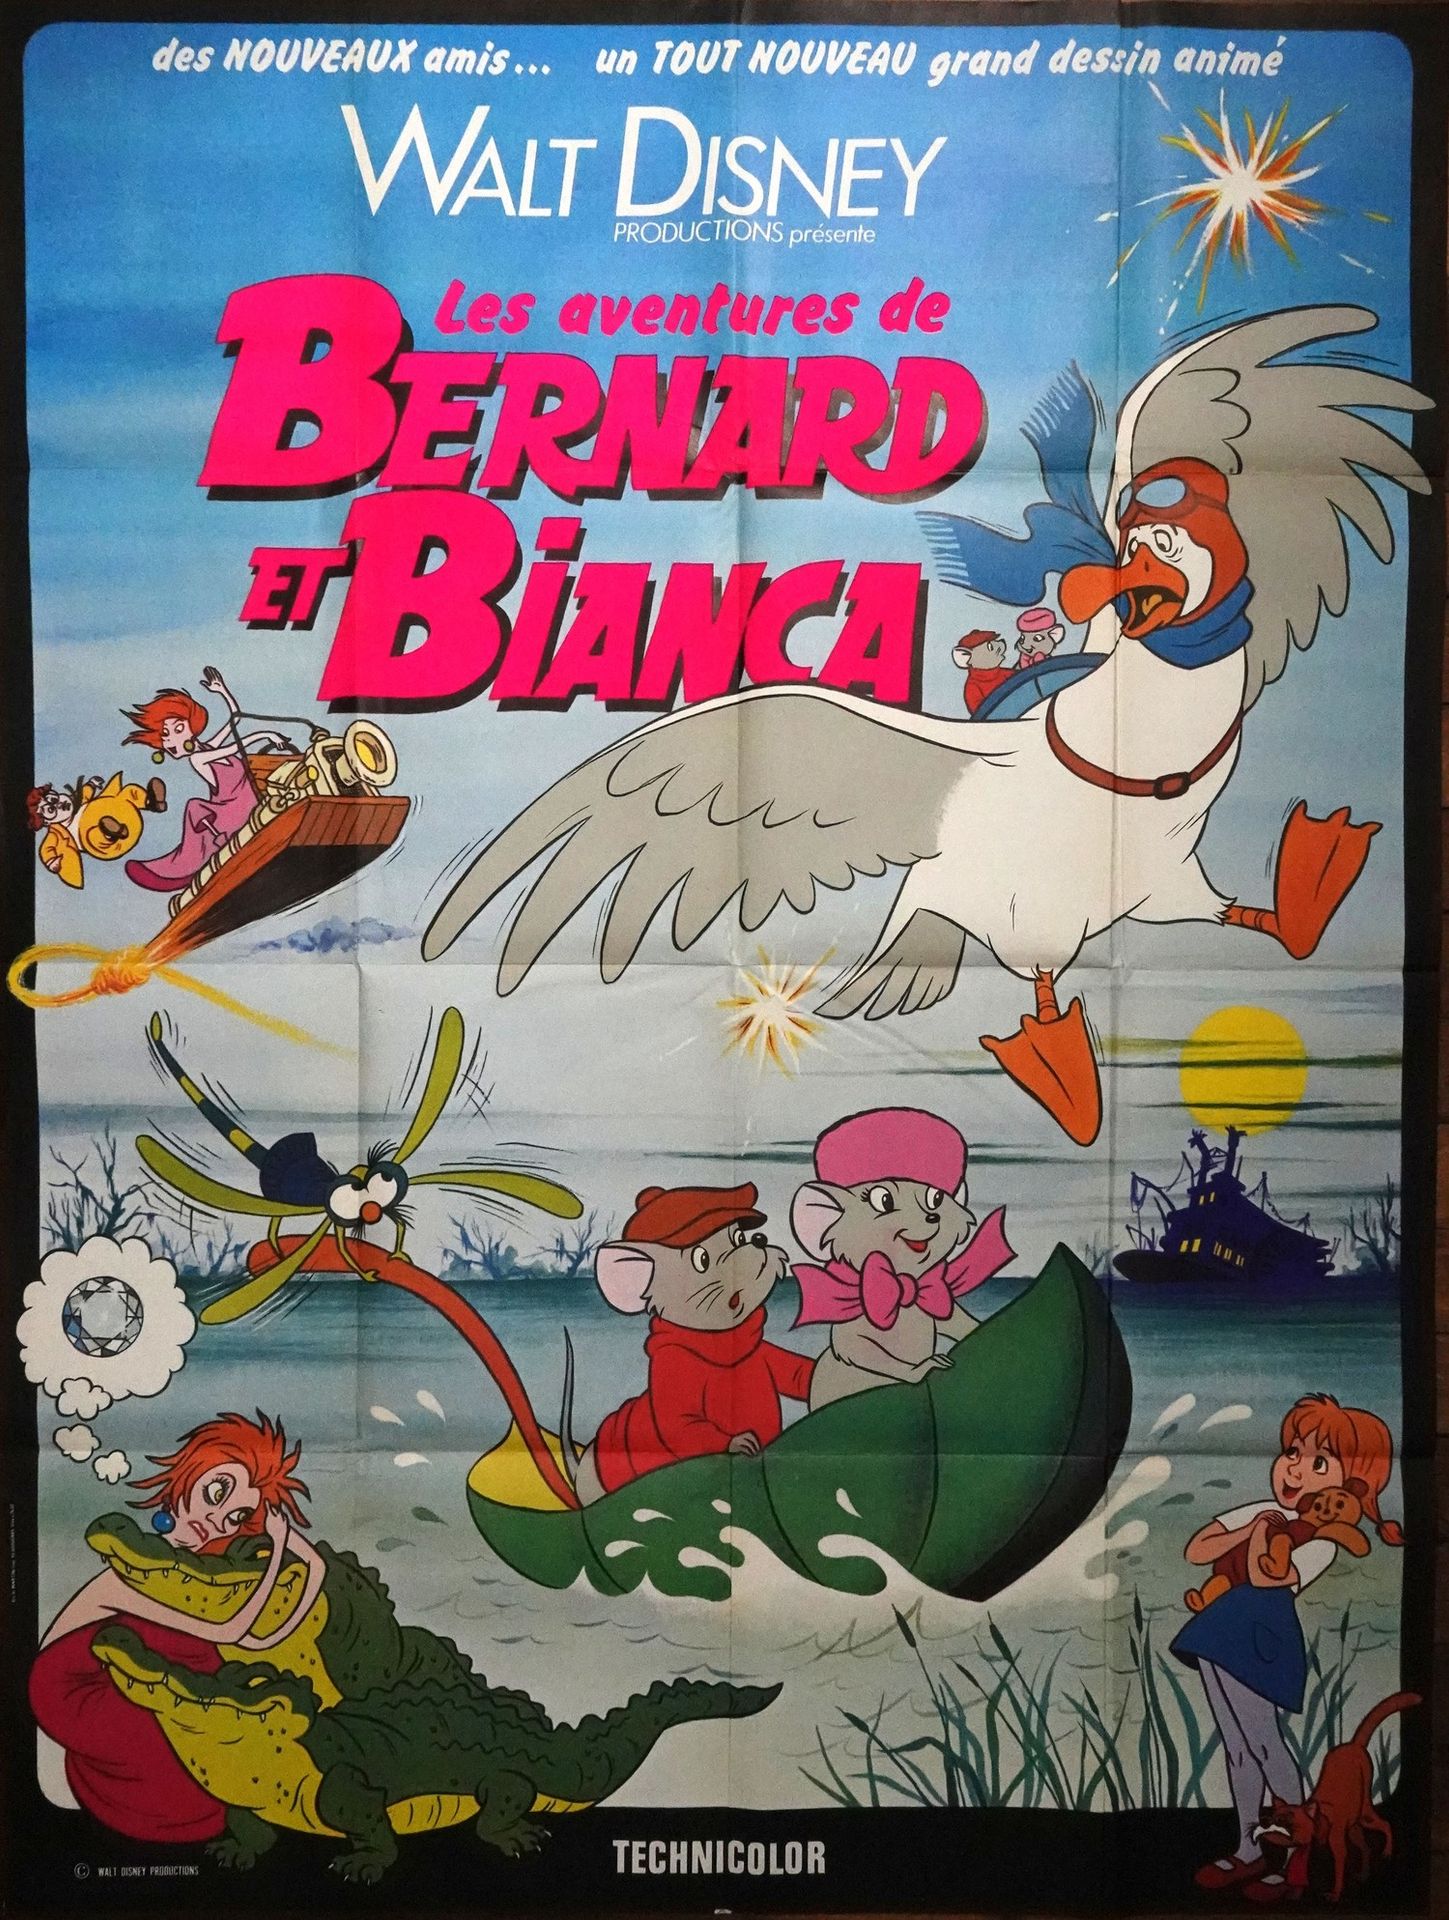 Null WALT DISNEY
The adventures of Bernard and Bianca
Original poster of the fil&hellip;